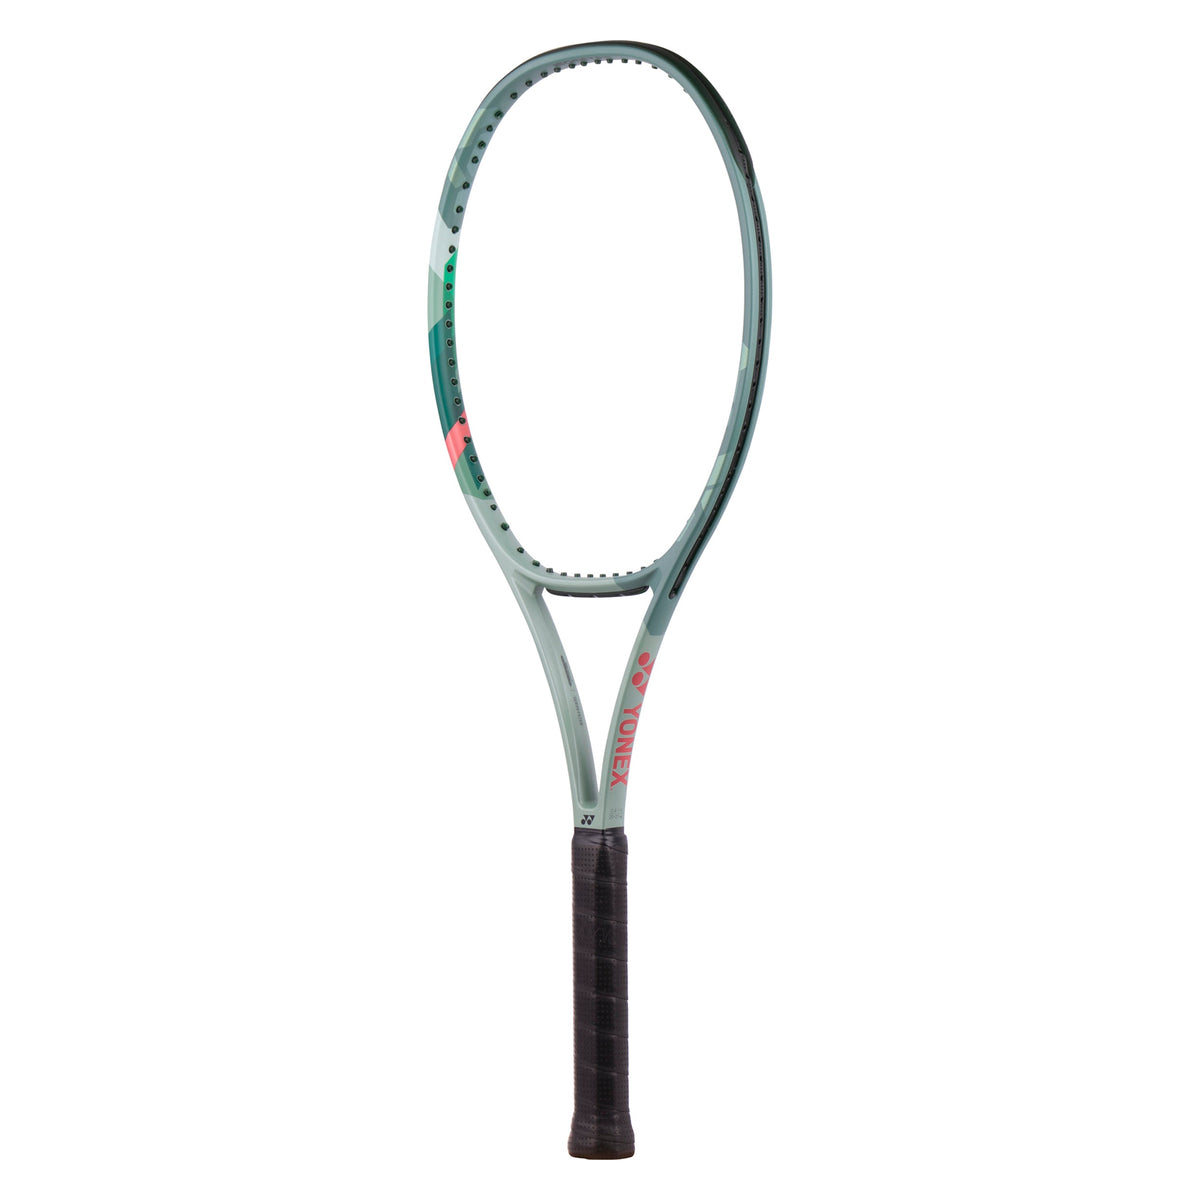 Demo Yonex Percept 97H 330g Tennis Racket (Free Restring) - Unstrung